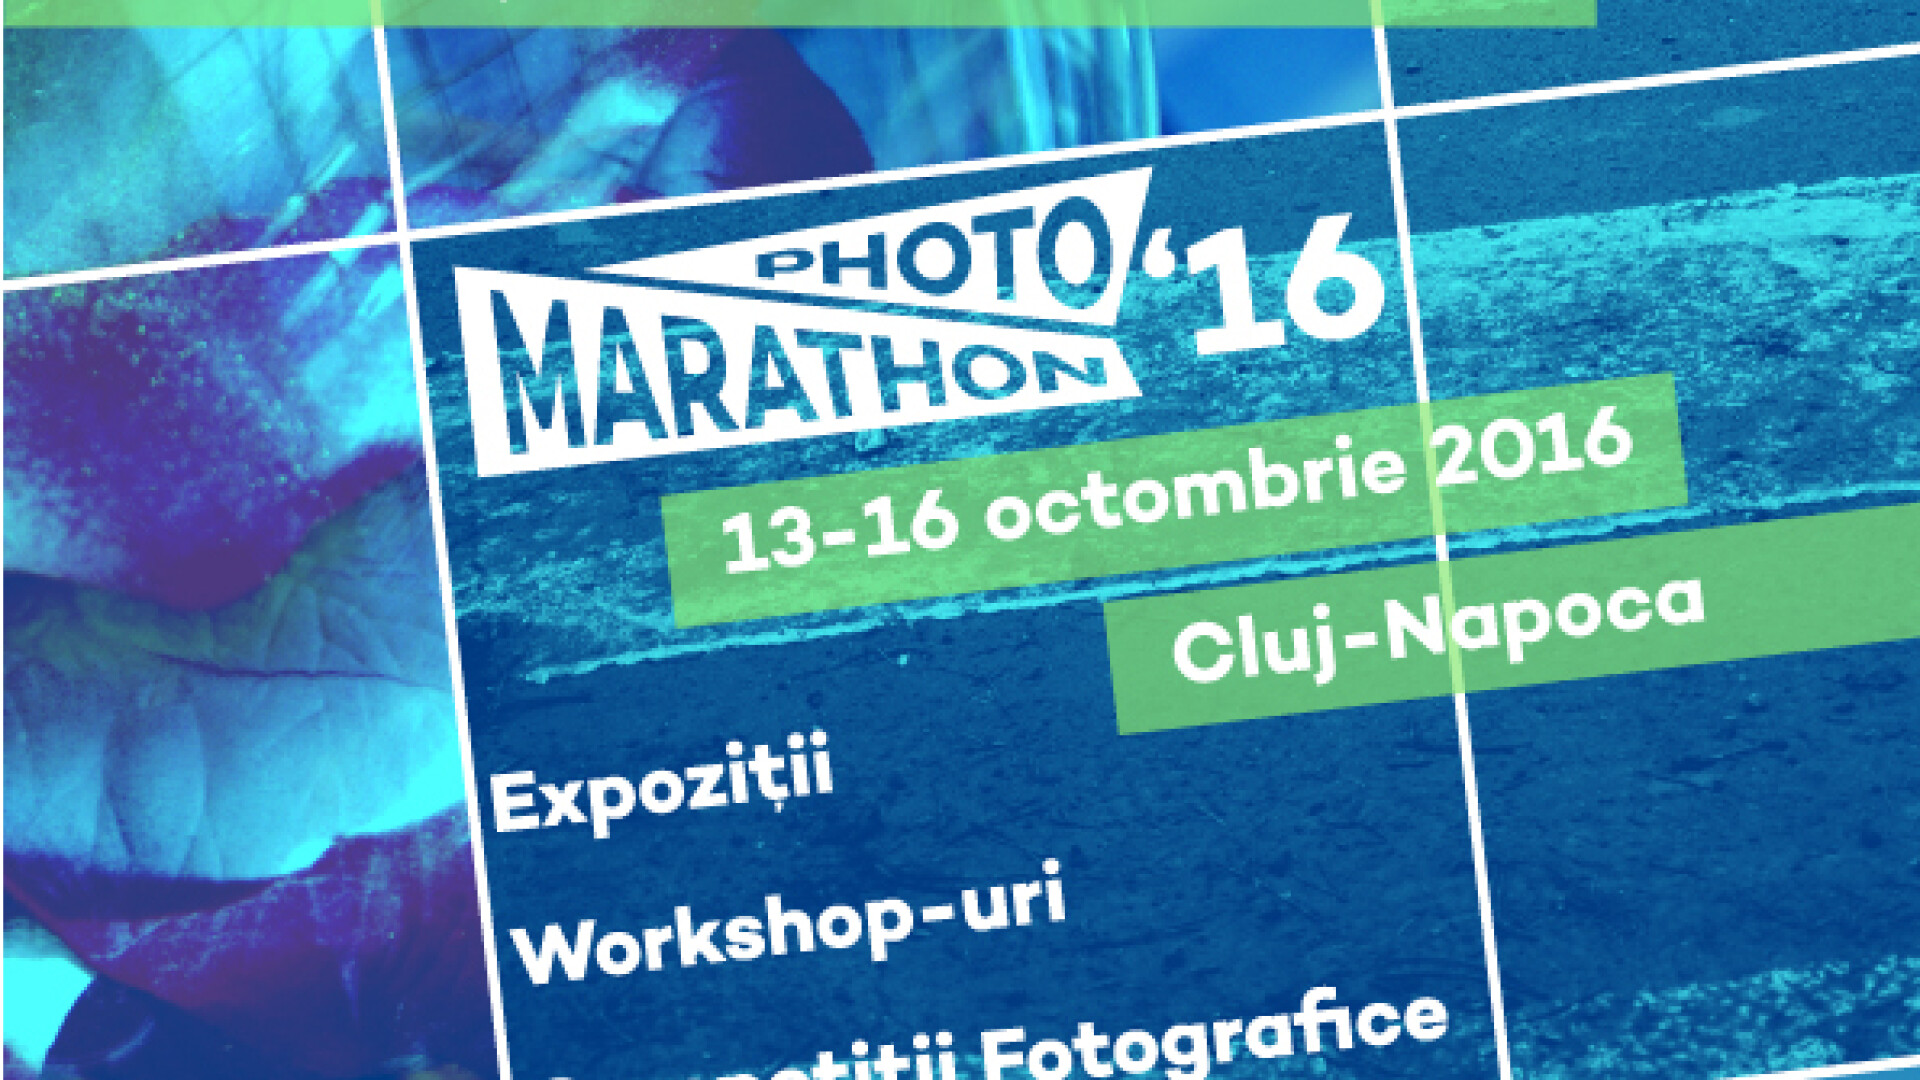 Cea mai mare competitie foto din Transilvania are loc in acest weekend in Cluj-Napoca